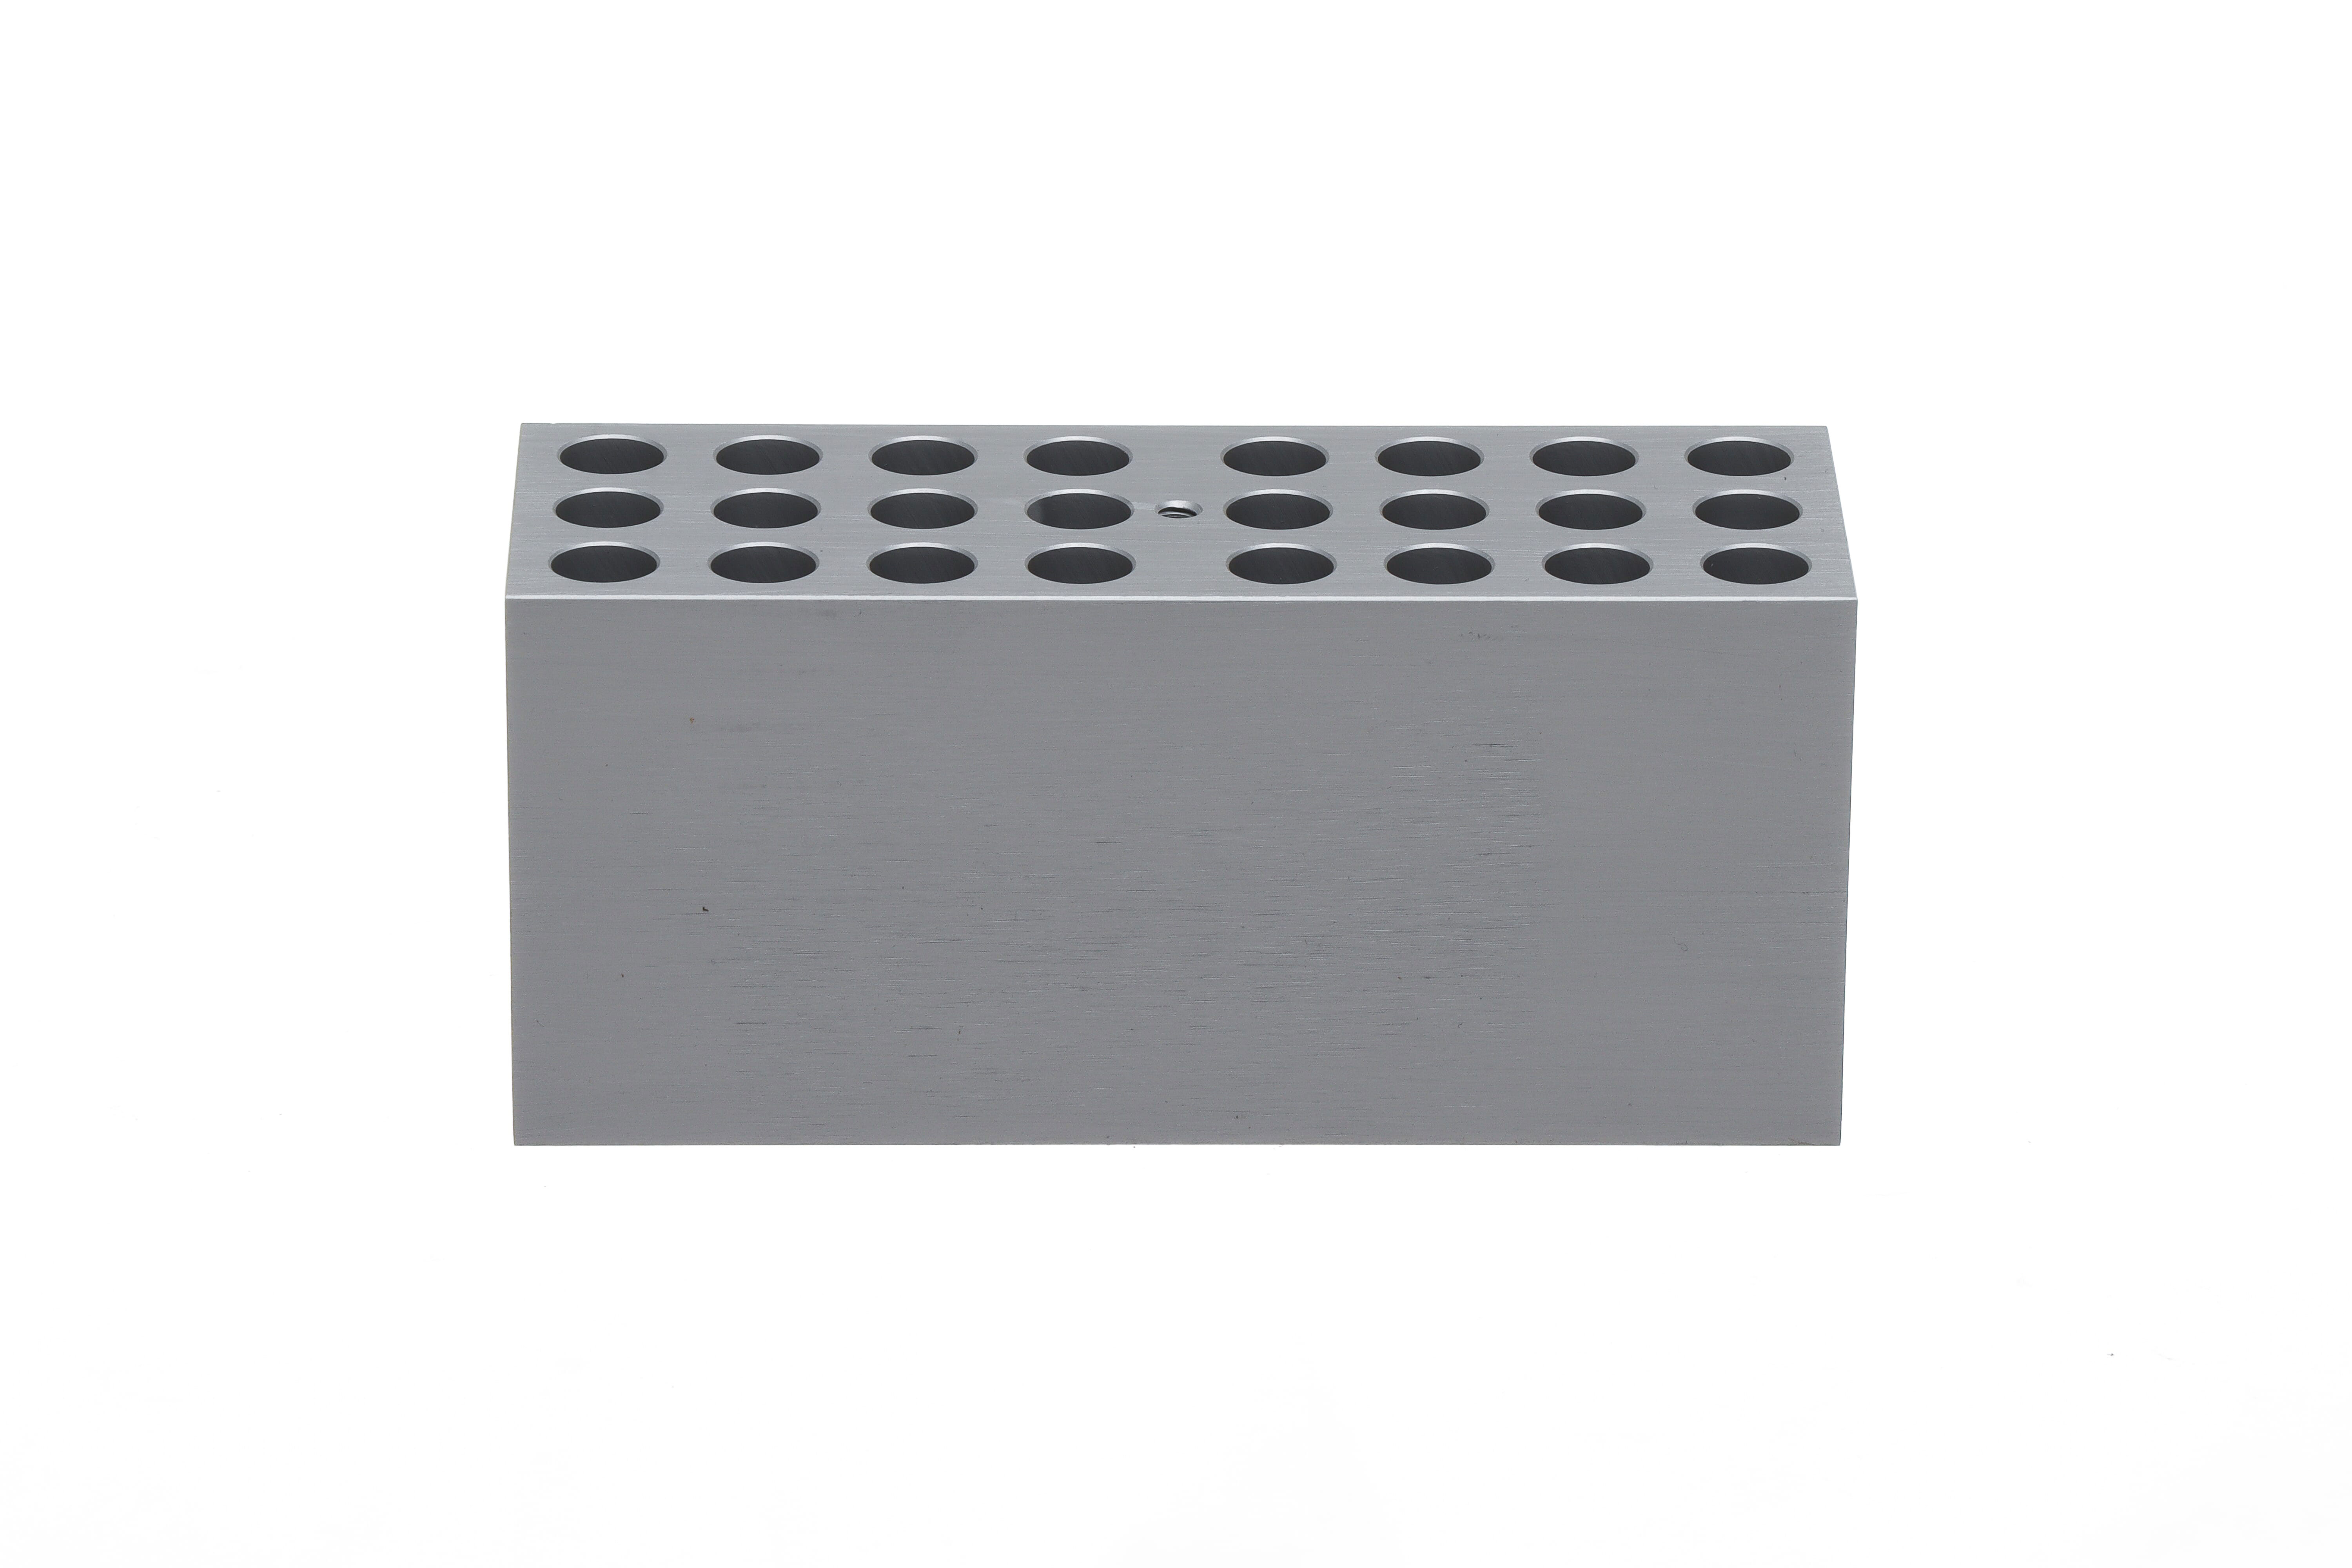 Interchangeable block for 24 x 1.5ml microcentrifuge tubes, 35mm hole depth, Ø10.8mm. GRANT. Accessory. QB Dry block heaters. For model: QBD1, QBD2, QBD4, QBH2